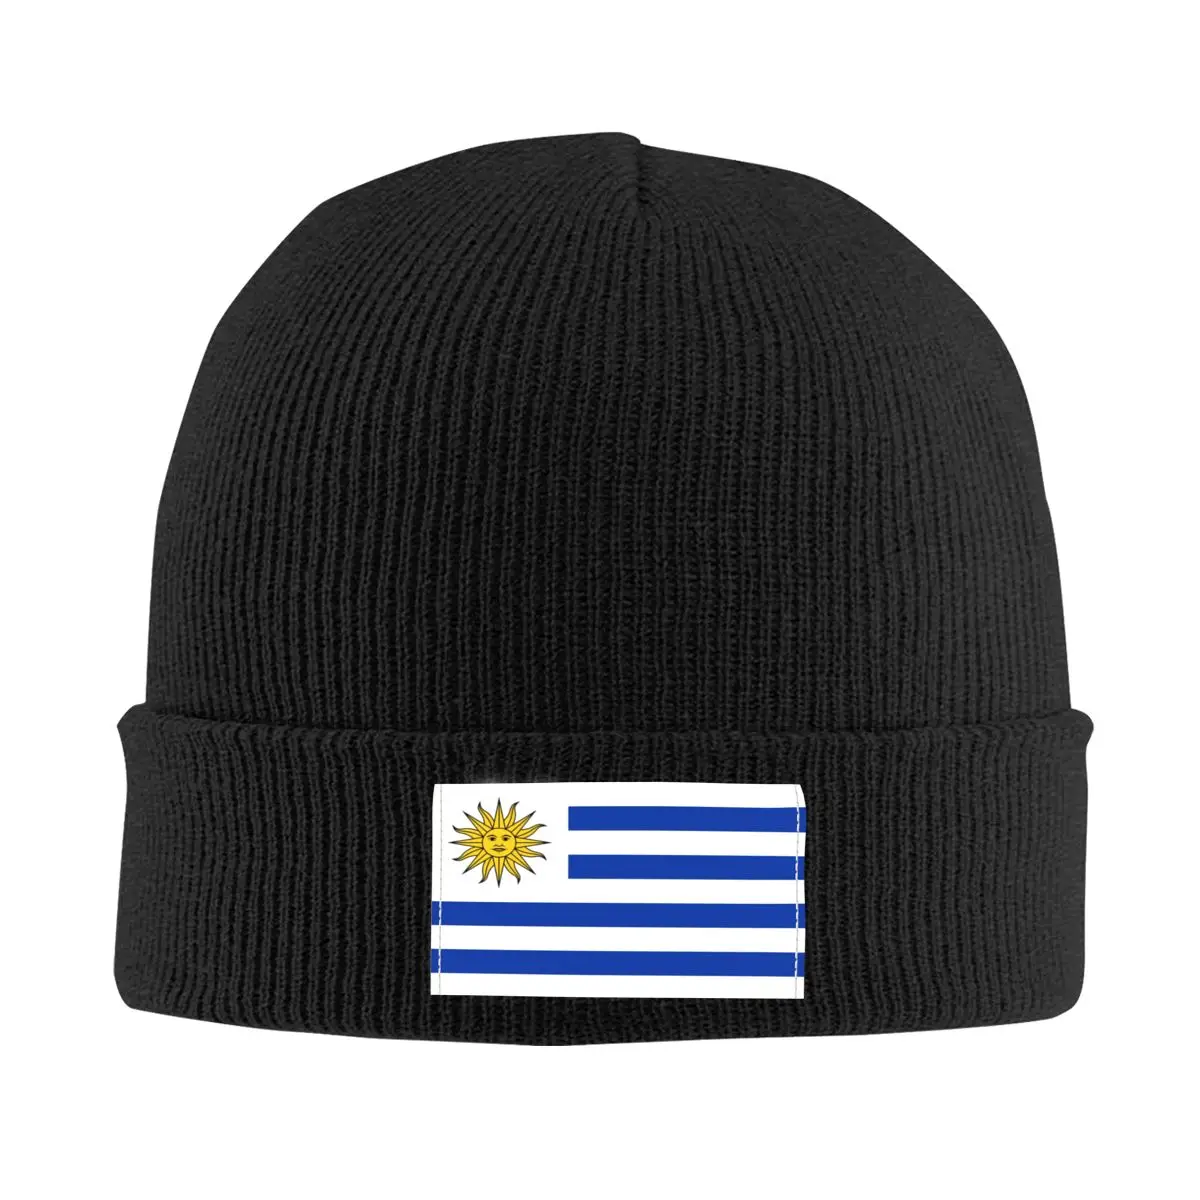 Flag Of Uruguay Bonnet Hat Knit Hats Men Women Hip Hop Unisex Warm Winter Skullies Beanies Cap 1